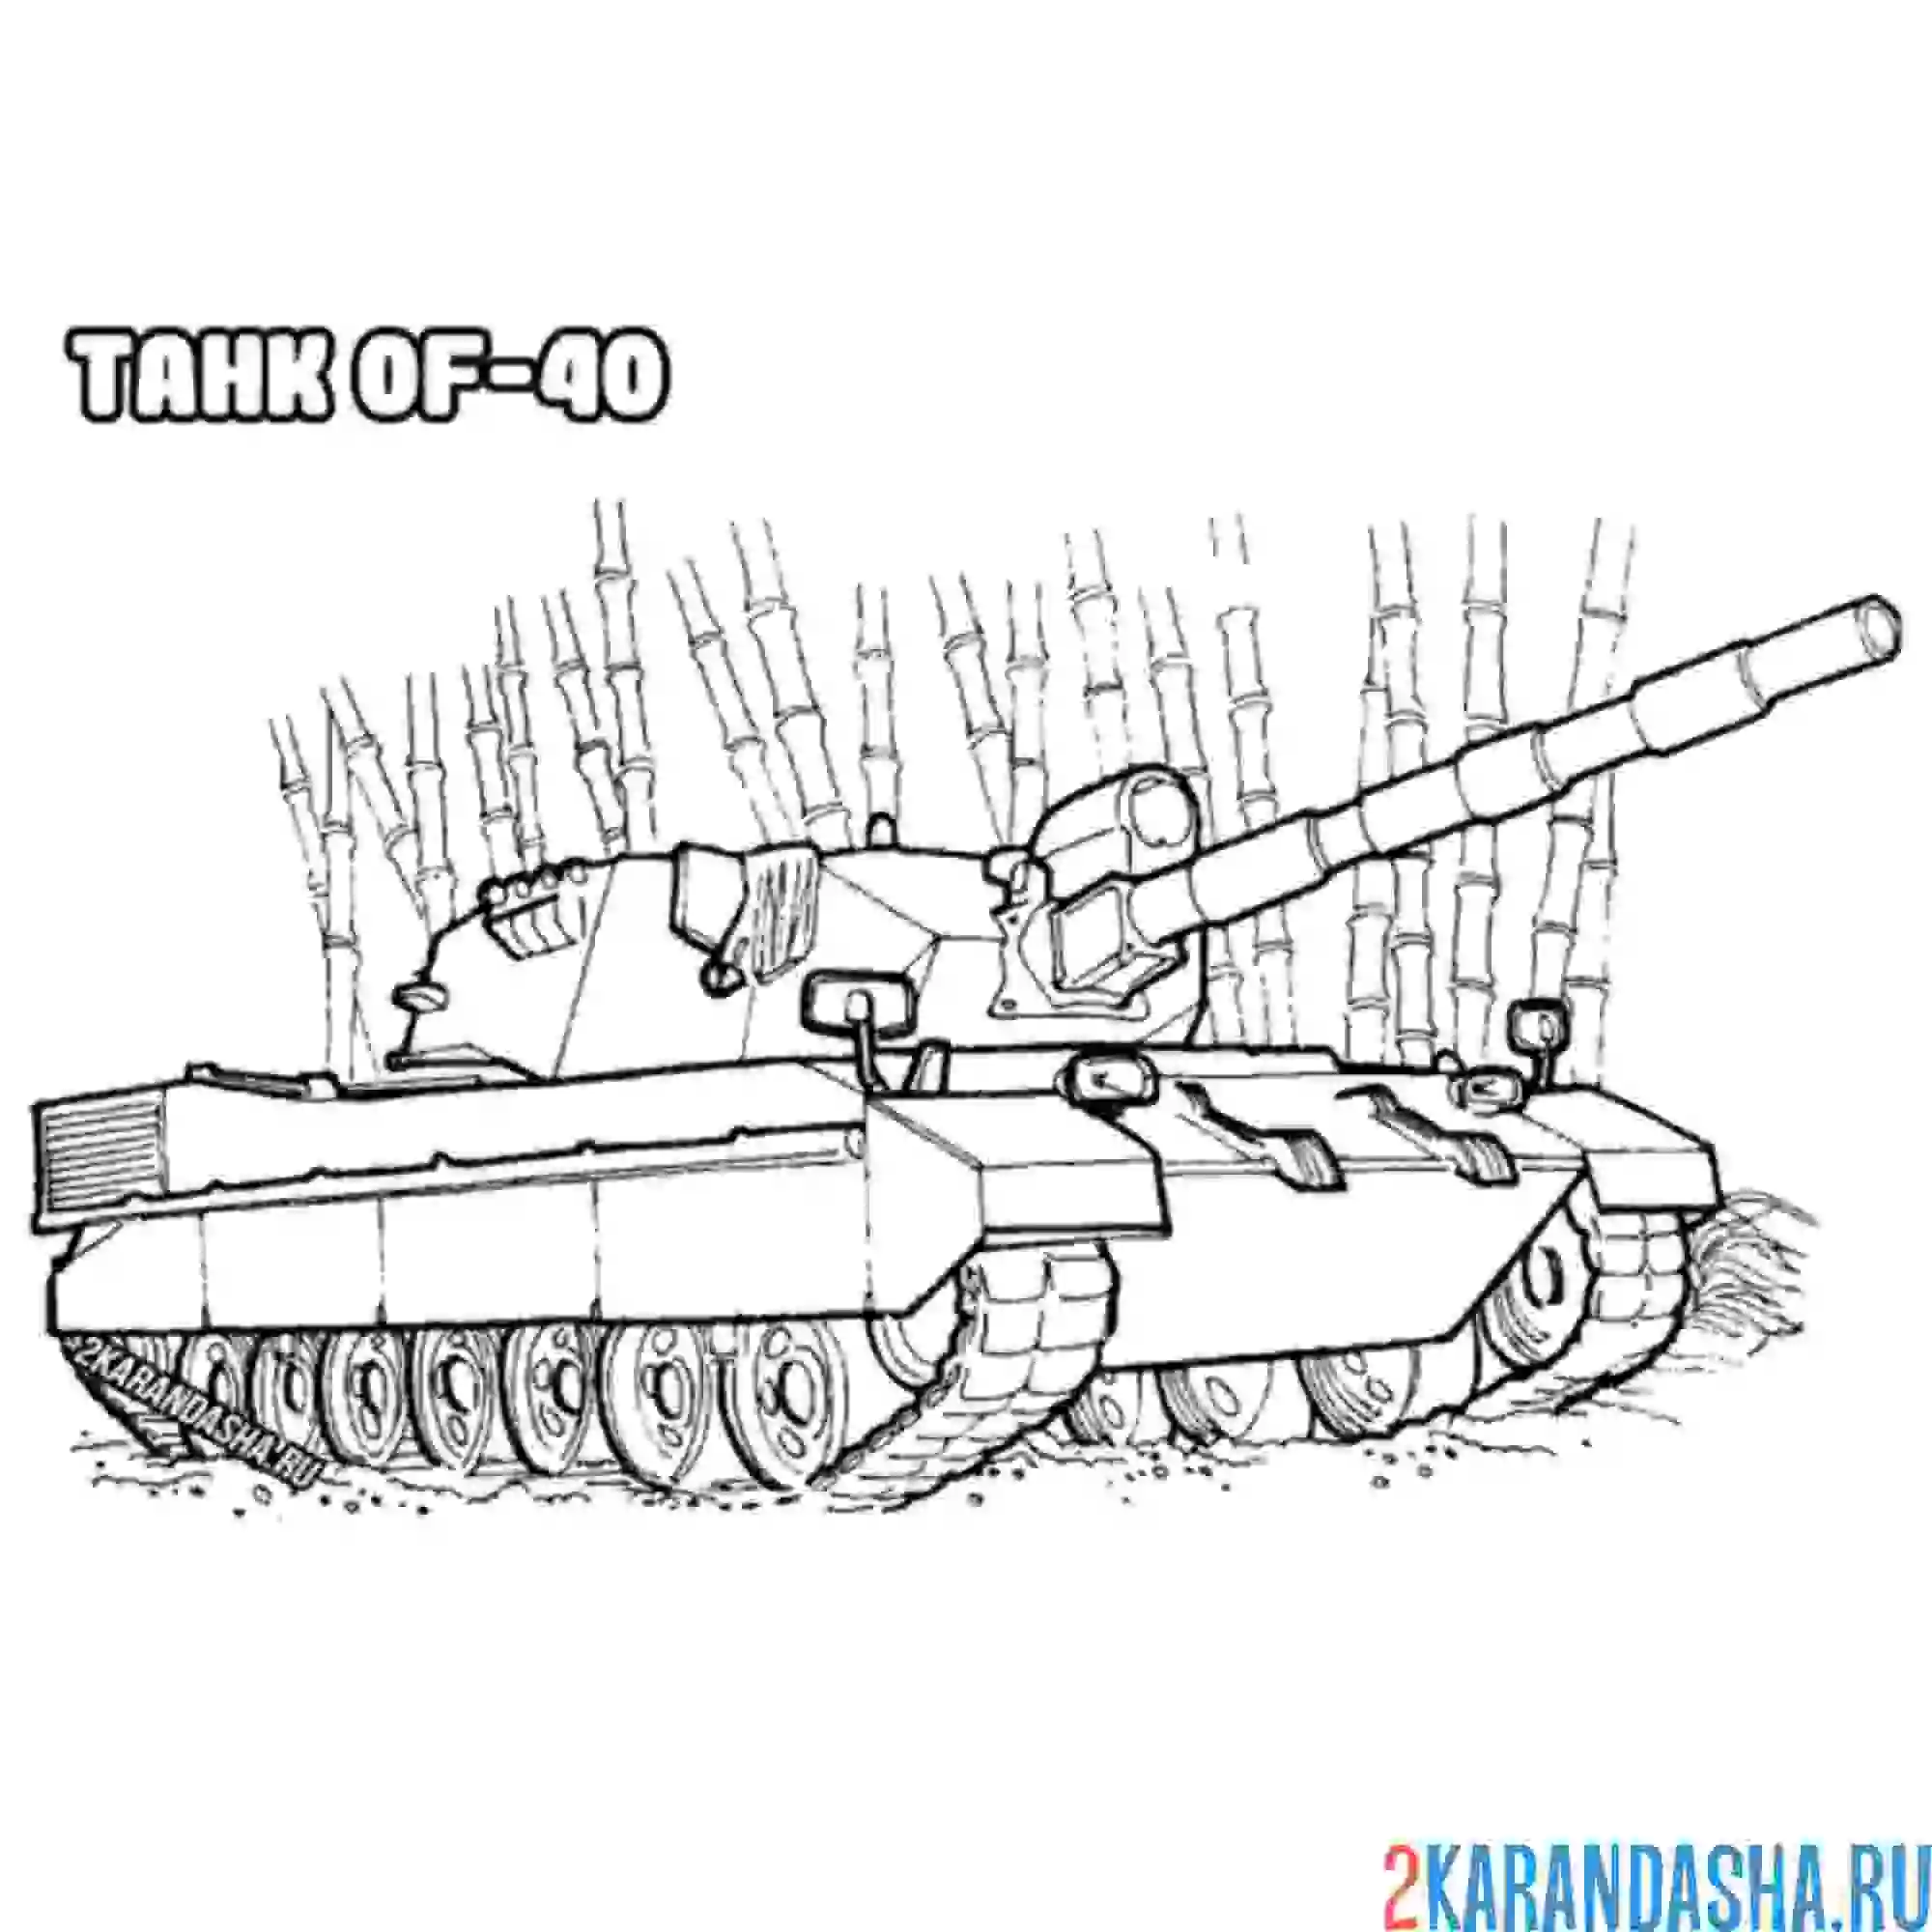 Раскраска танк of-40